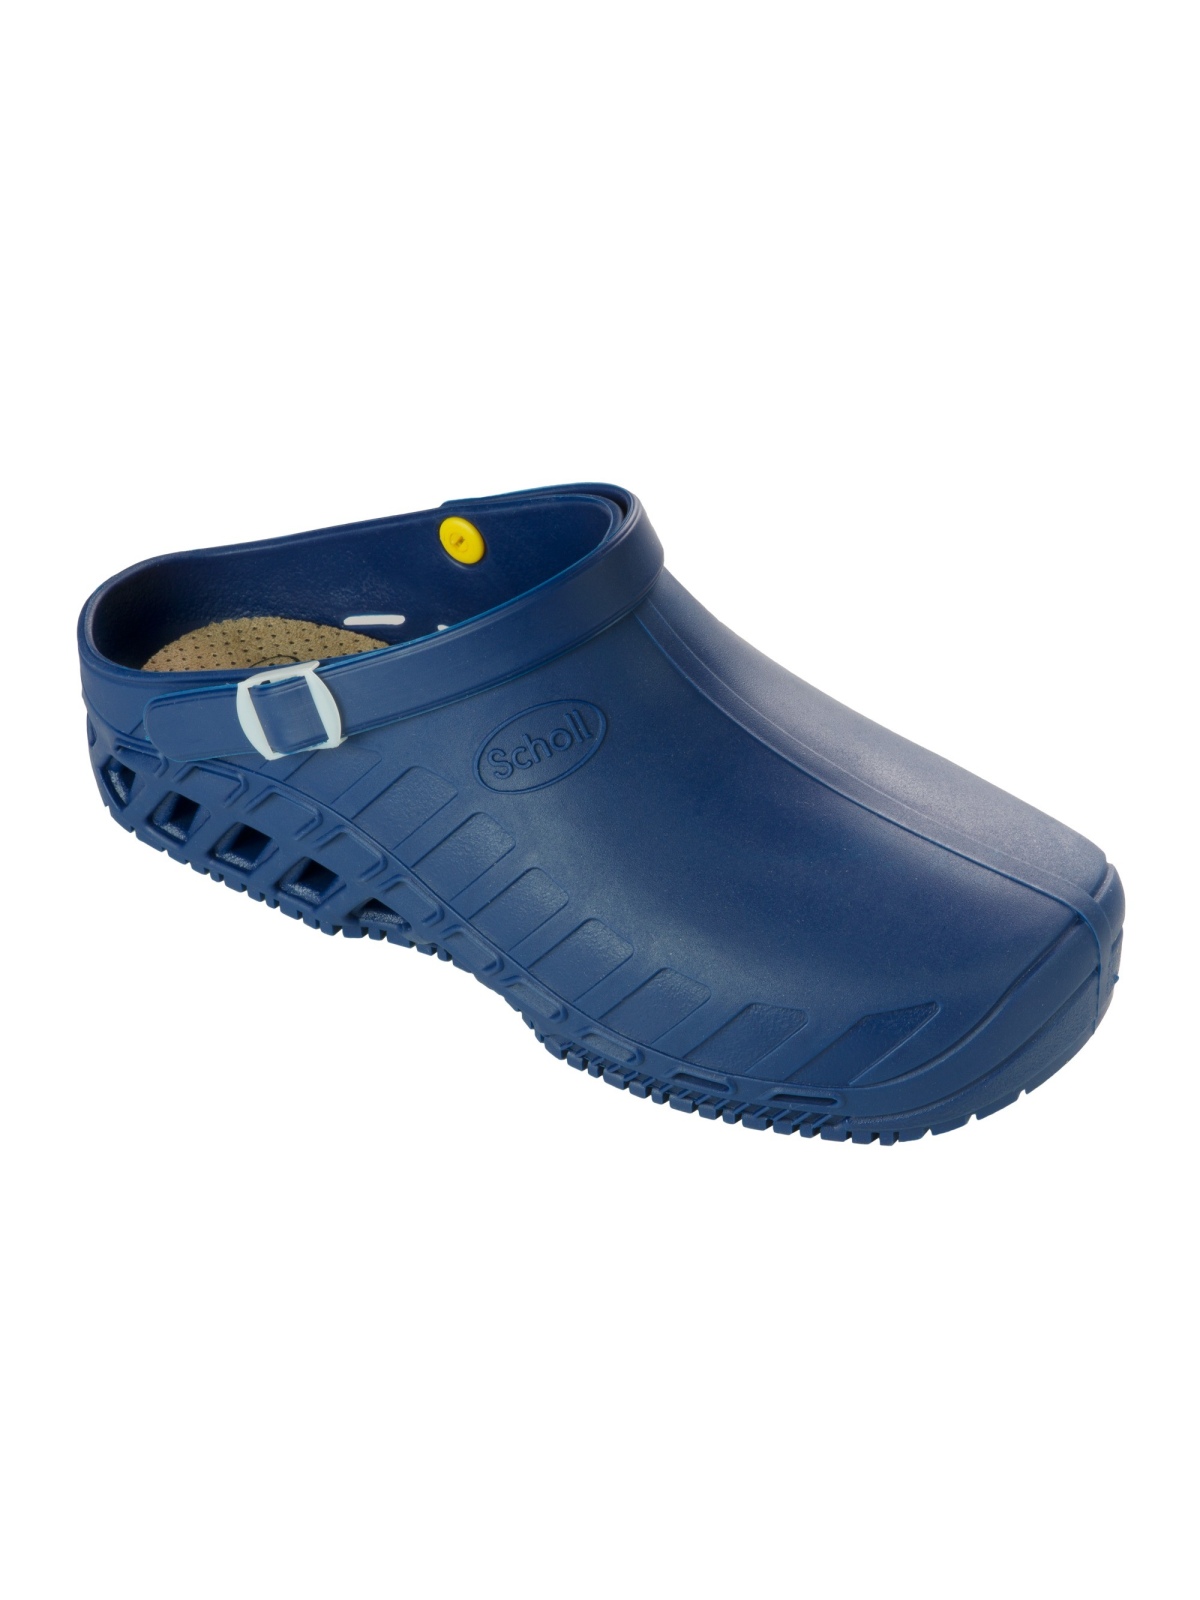 Complejo Fondos robot Zueco Clog Evo Dr. Scholl | DR. SCHOLL | Calzado laboral Numeros zapatos 35  Colores Azul marino